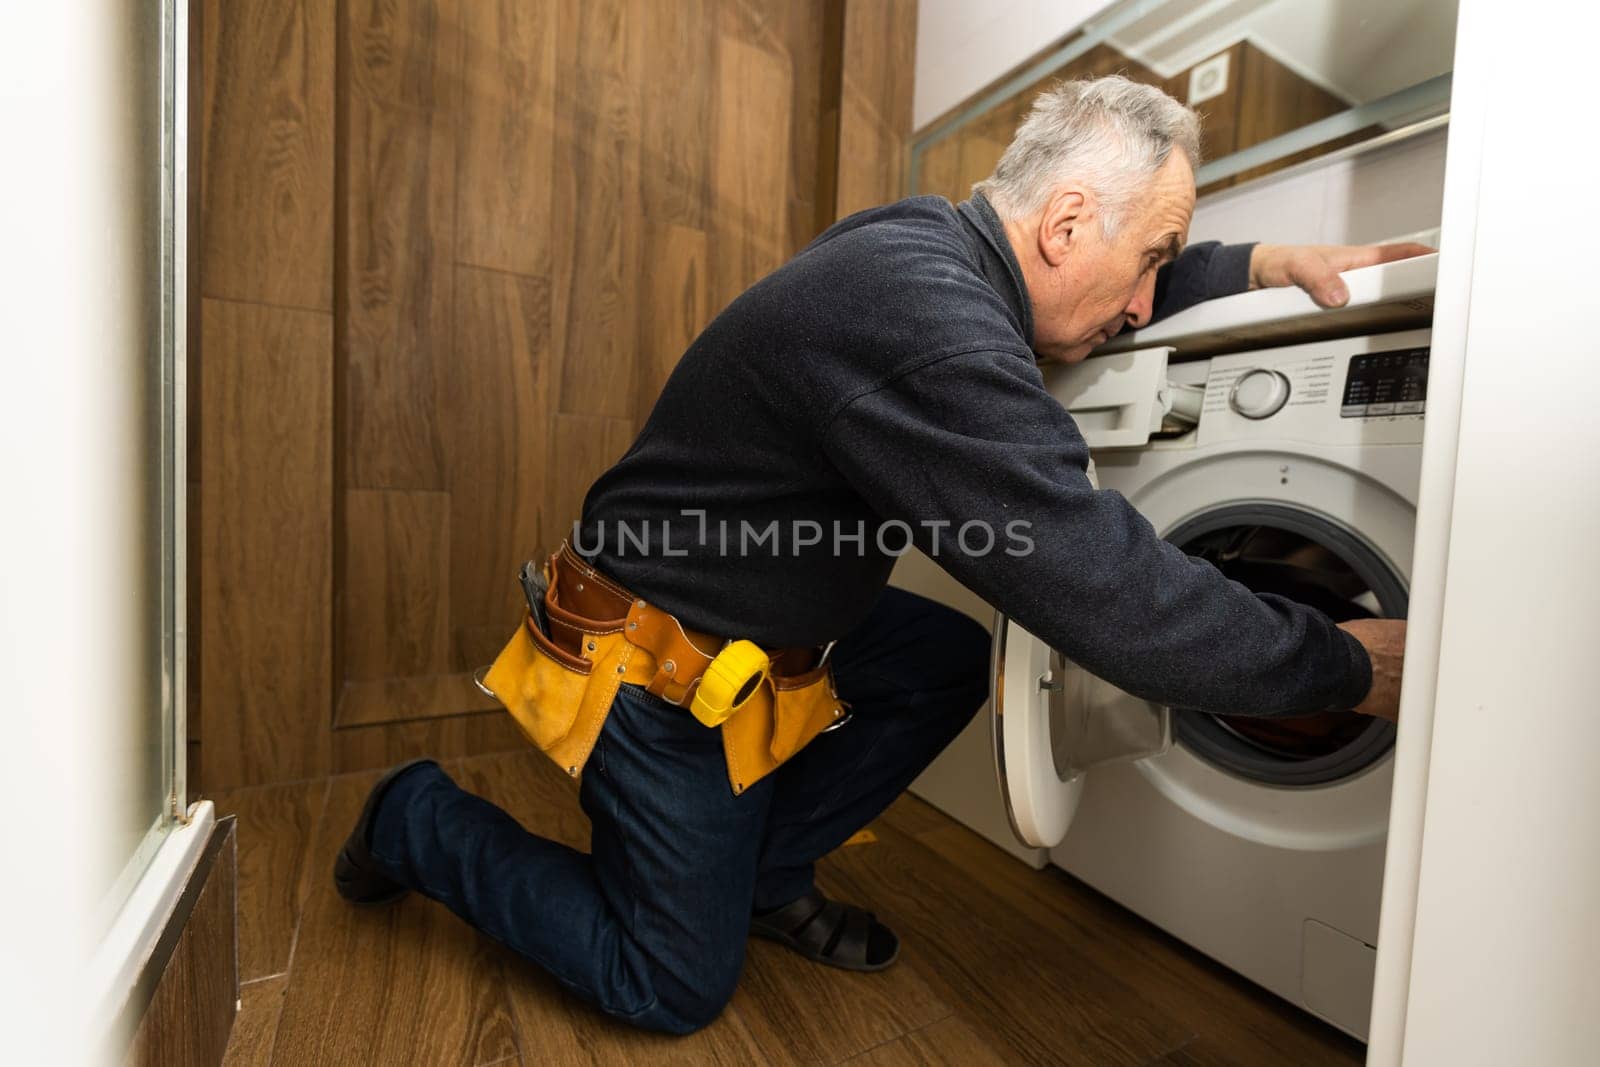 an elderly man repairs a washing machine by Andelov13